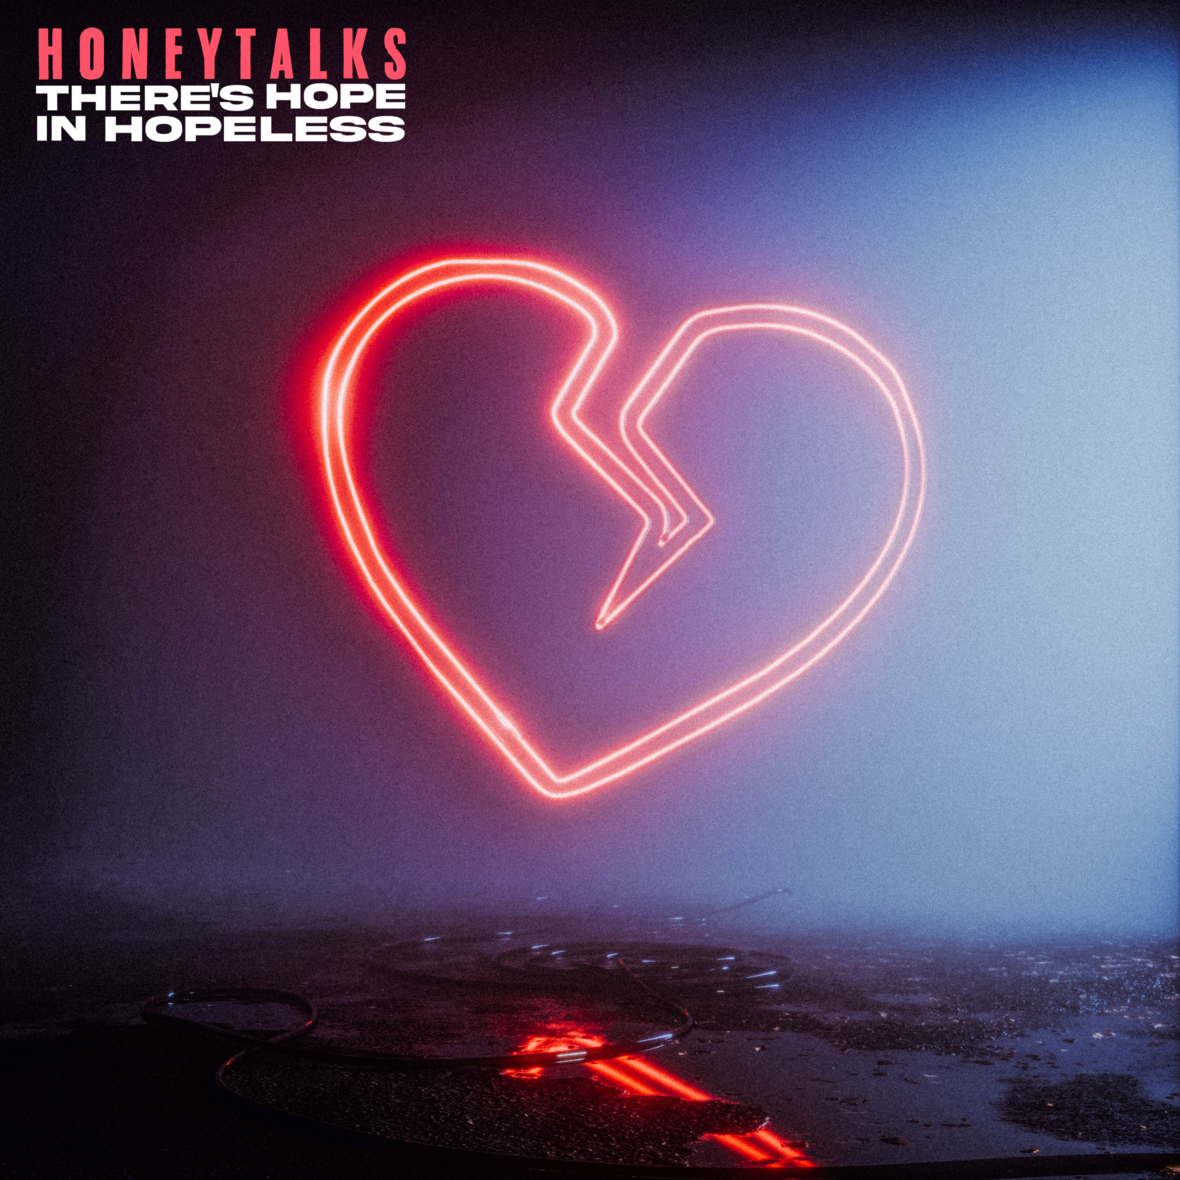 Honeytalks - There s Hope in Hopeless EP Artwork - Cameron Burns 3000 x 3000 